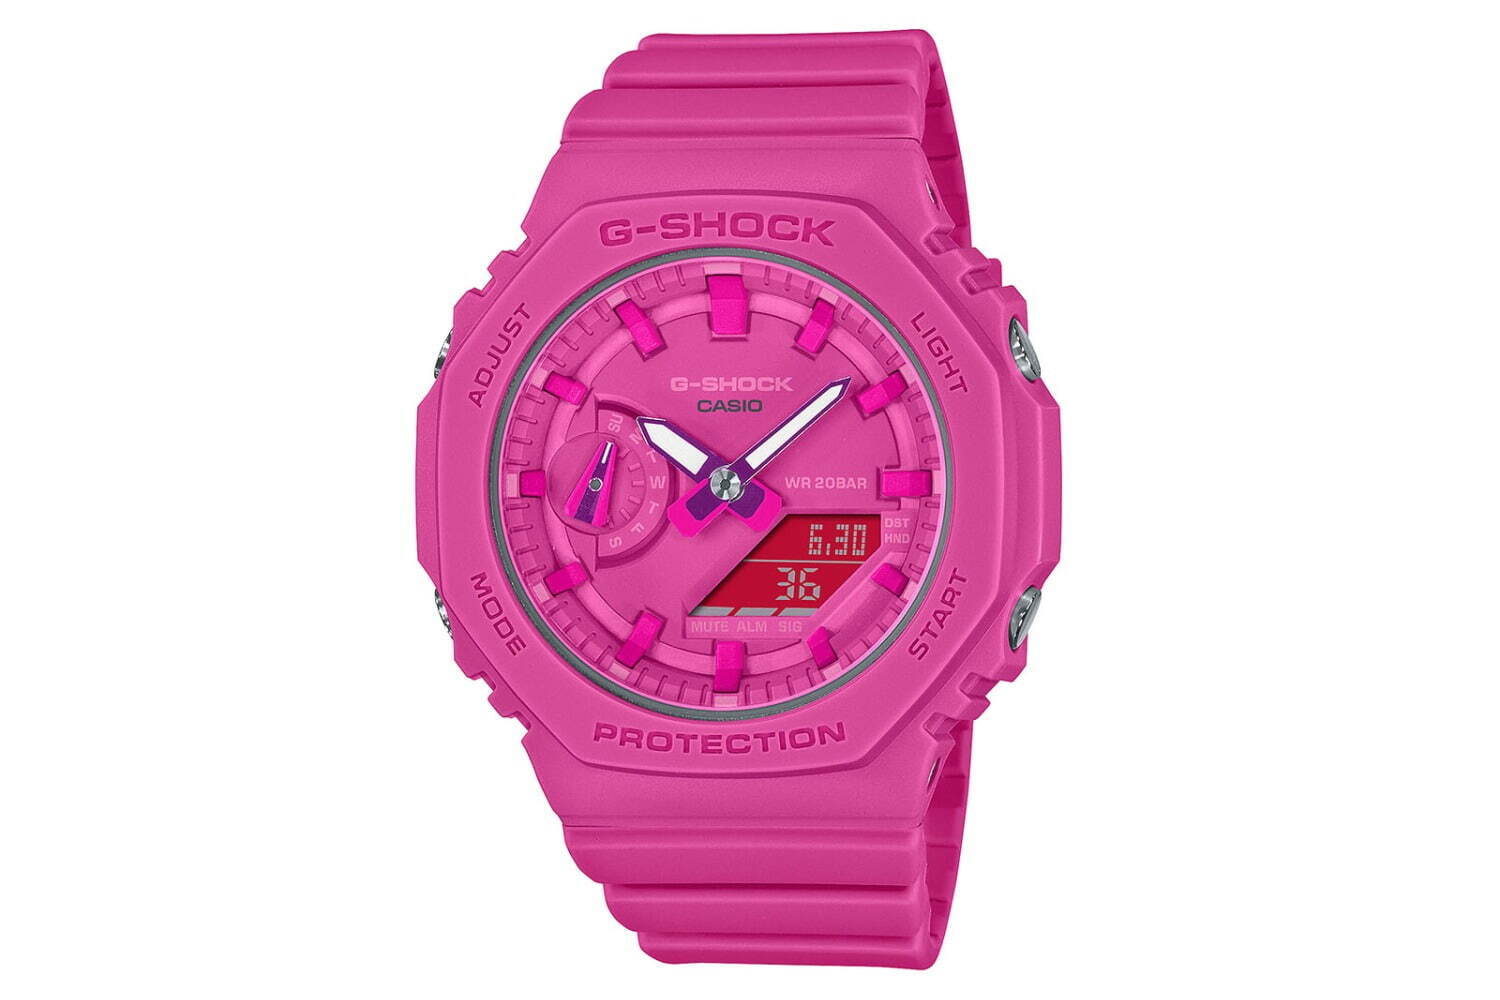 G-SHOCKの新作腕時計、オールピンクに仕上げたデジタル 